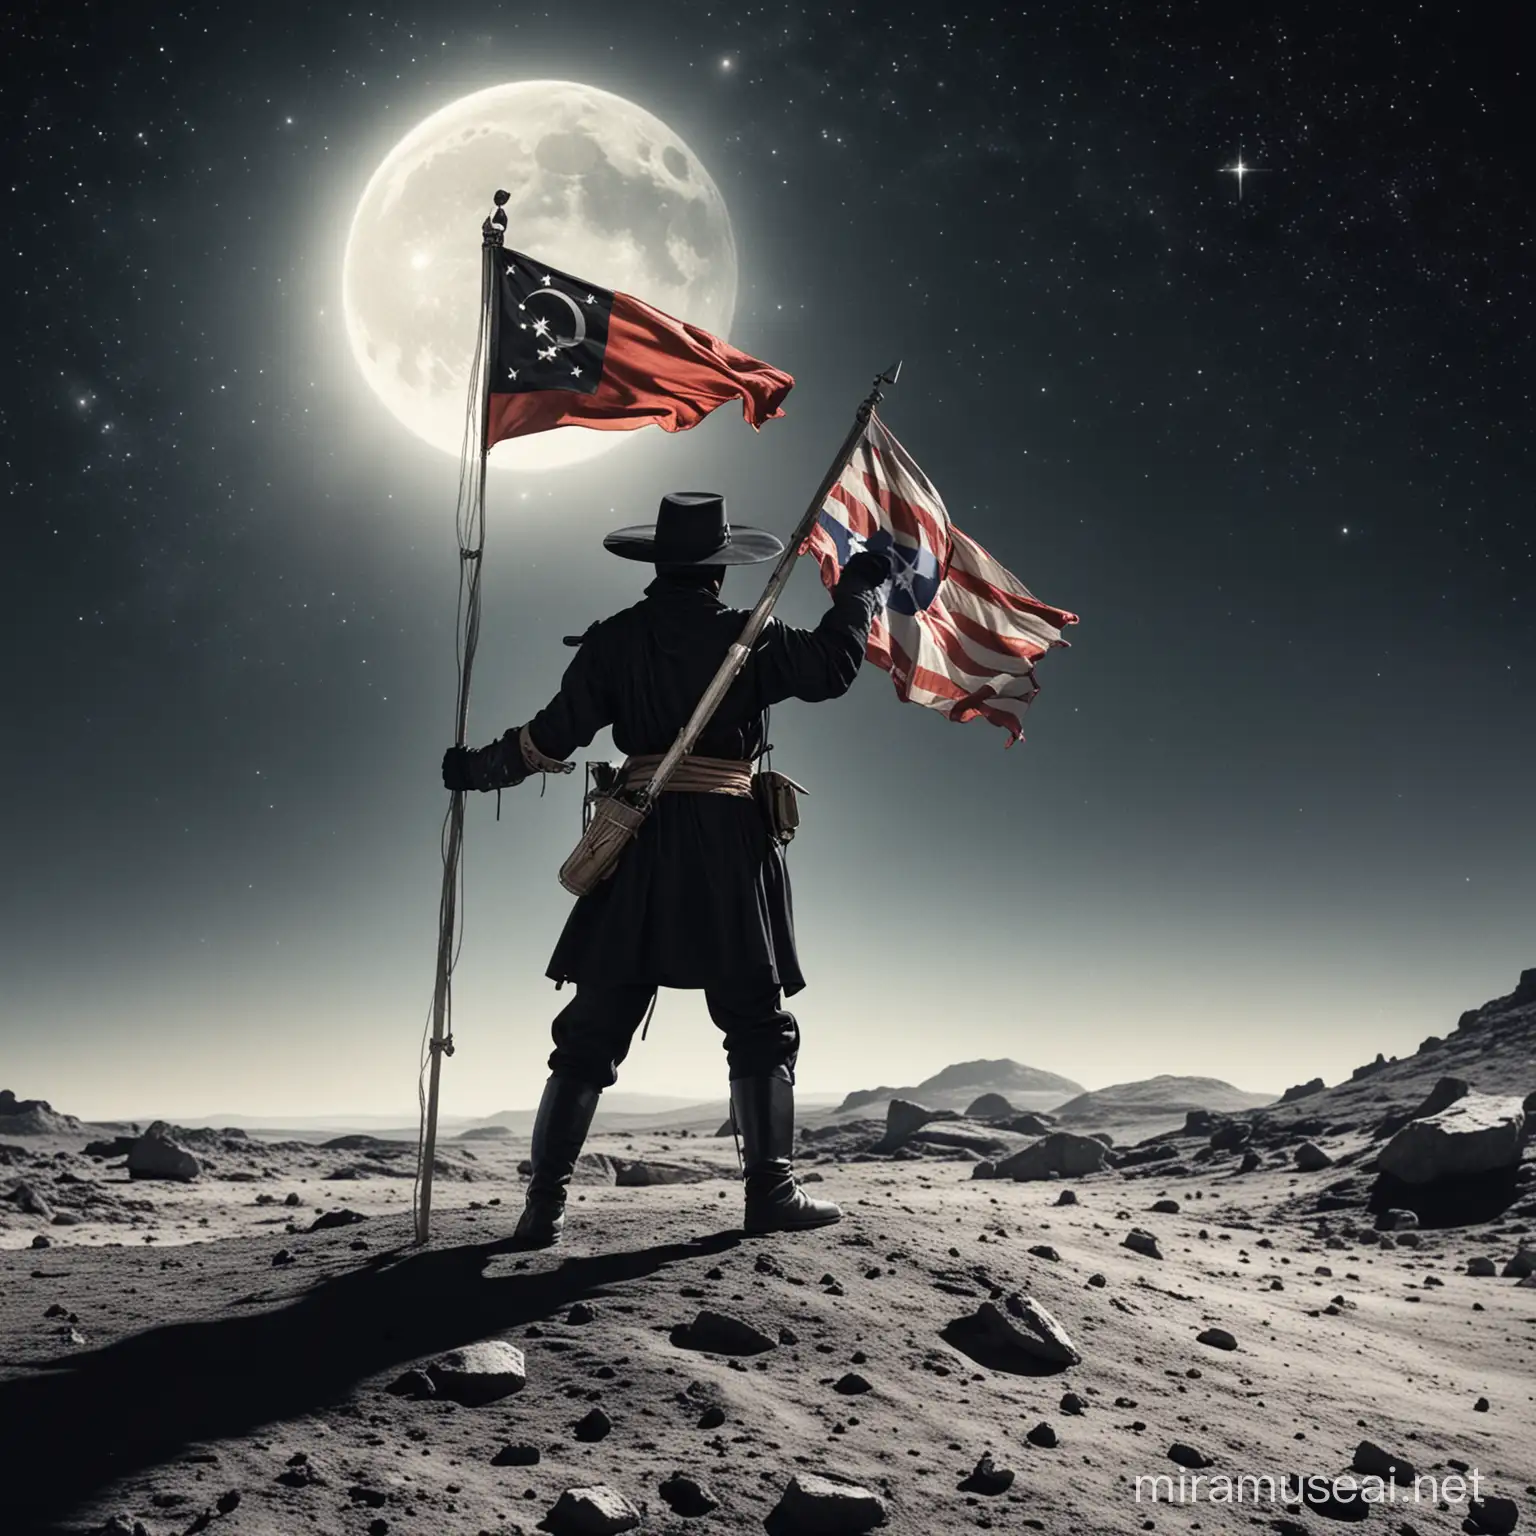 Zorro Planting Flag on Moon in Vast Space